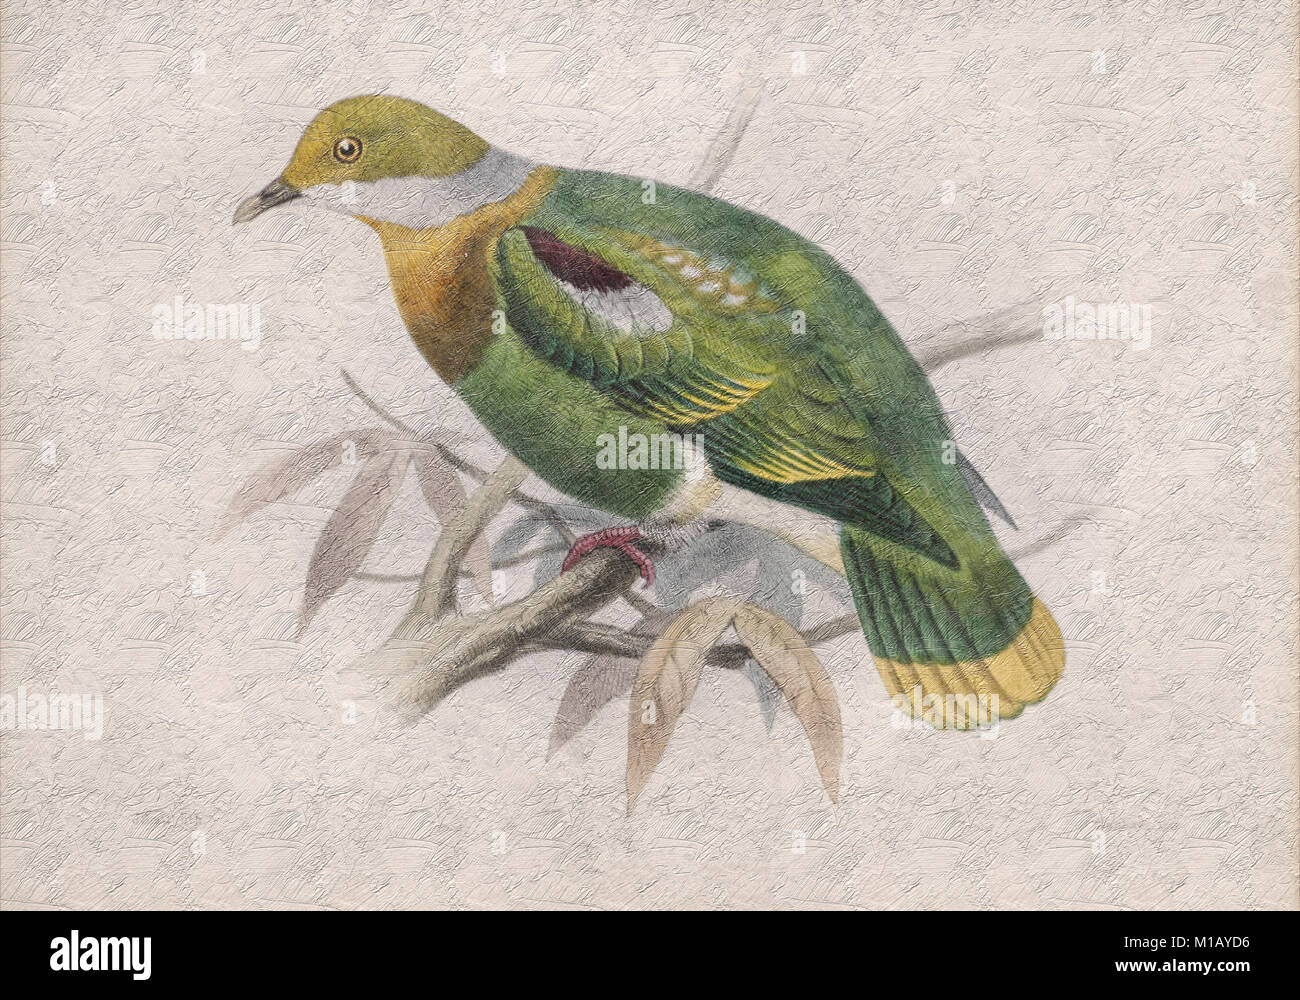 Digitally enhanced Illustration of Eastern Ornate Fruit-dove (ptilopus gestroi now Ptilinopus gestroi) from 1878 Stock Photo